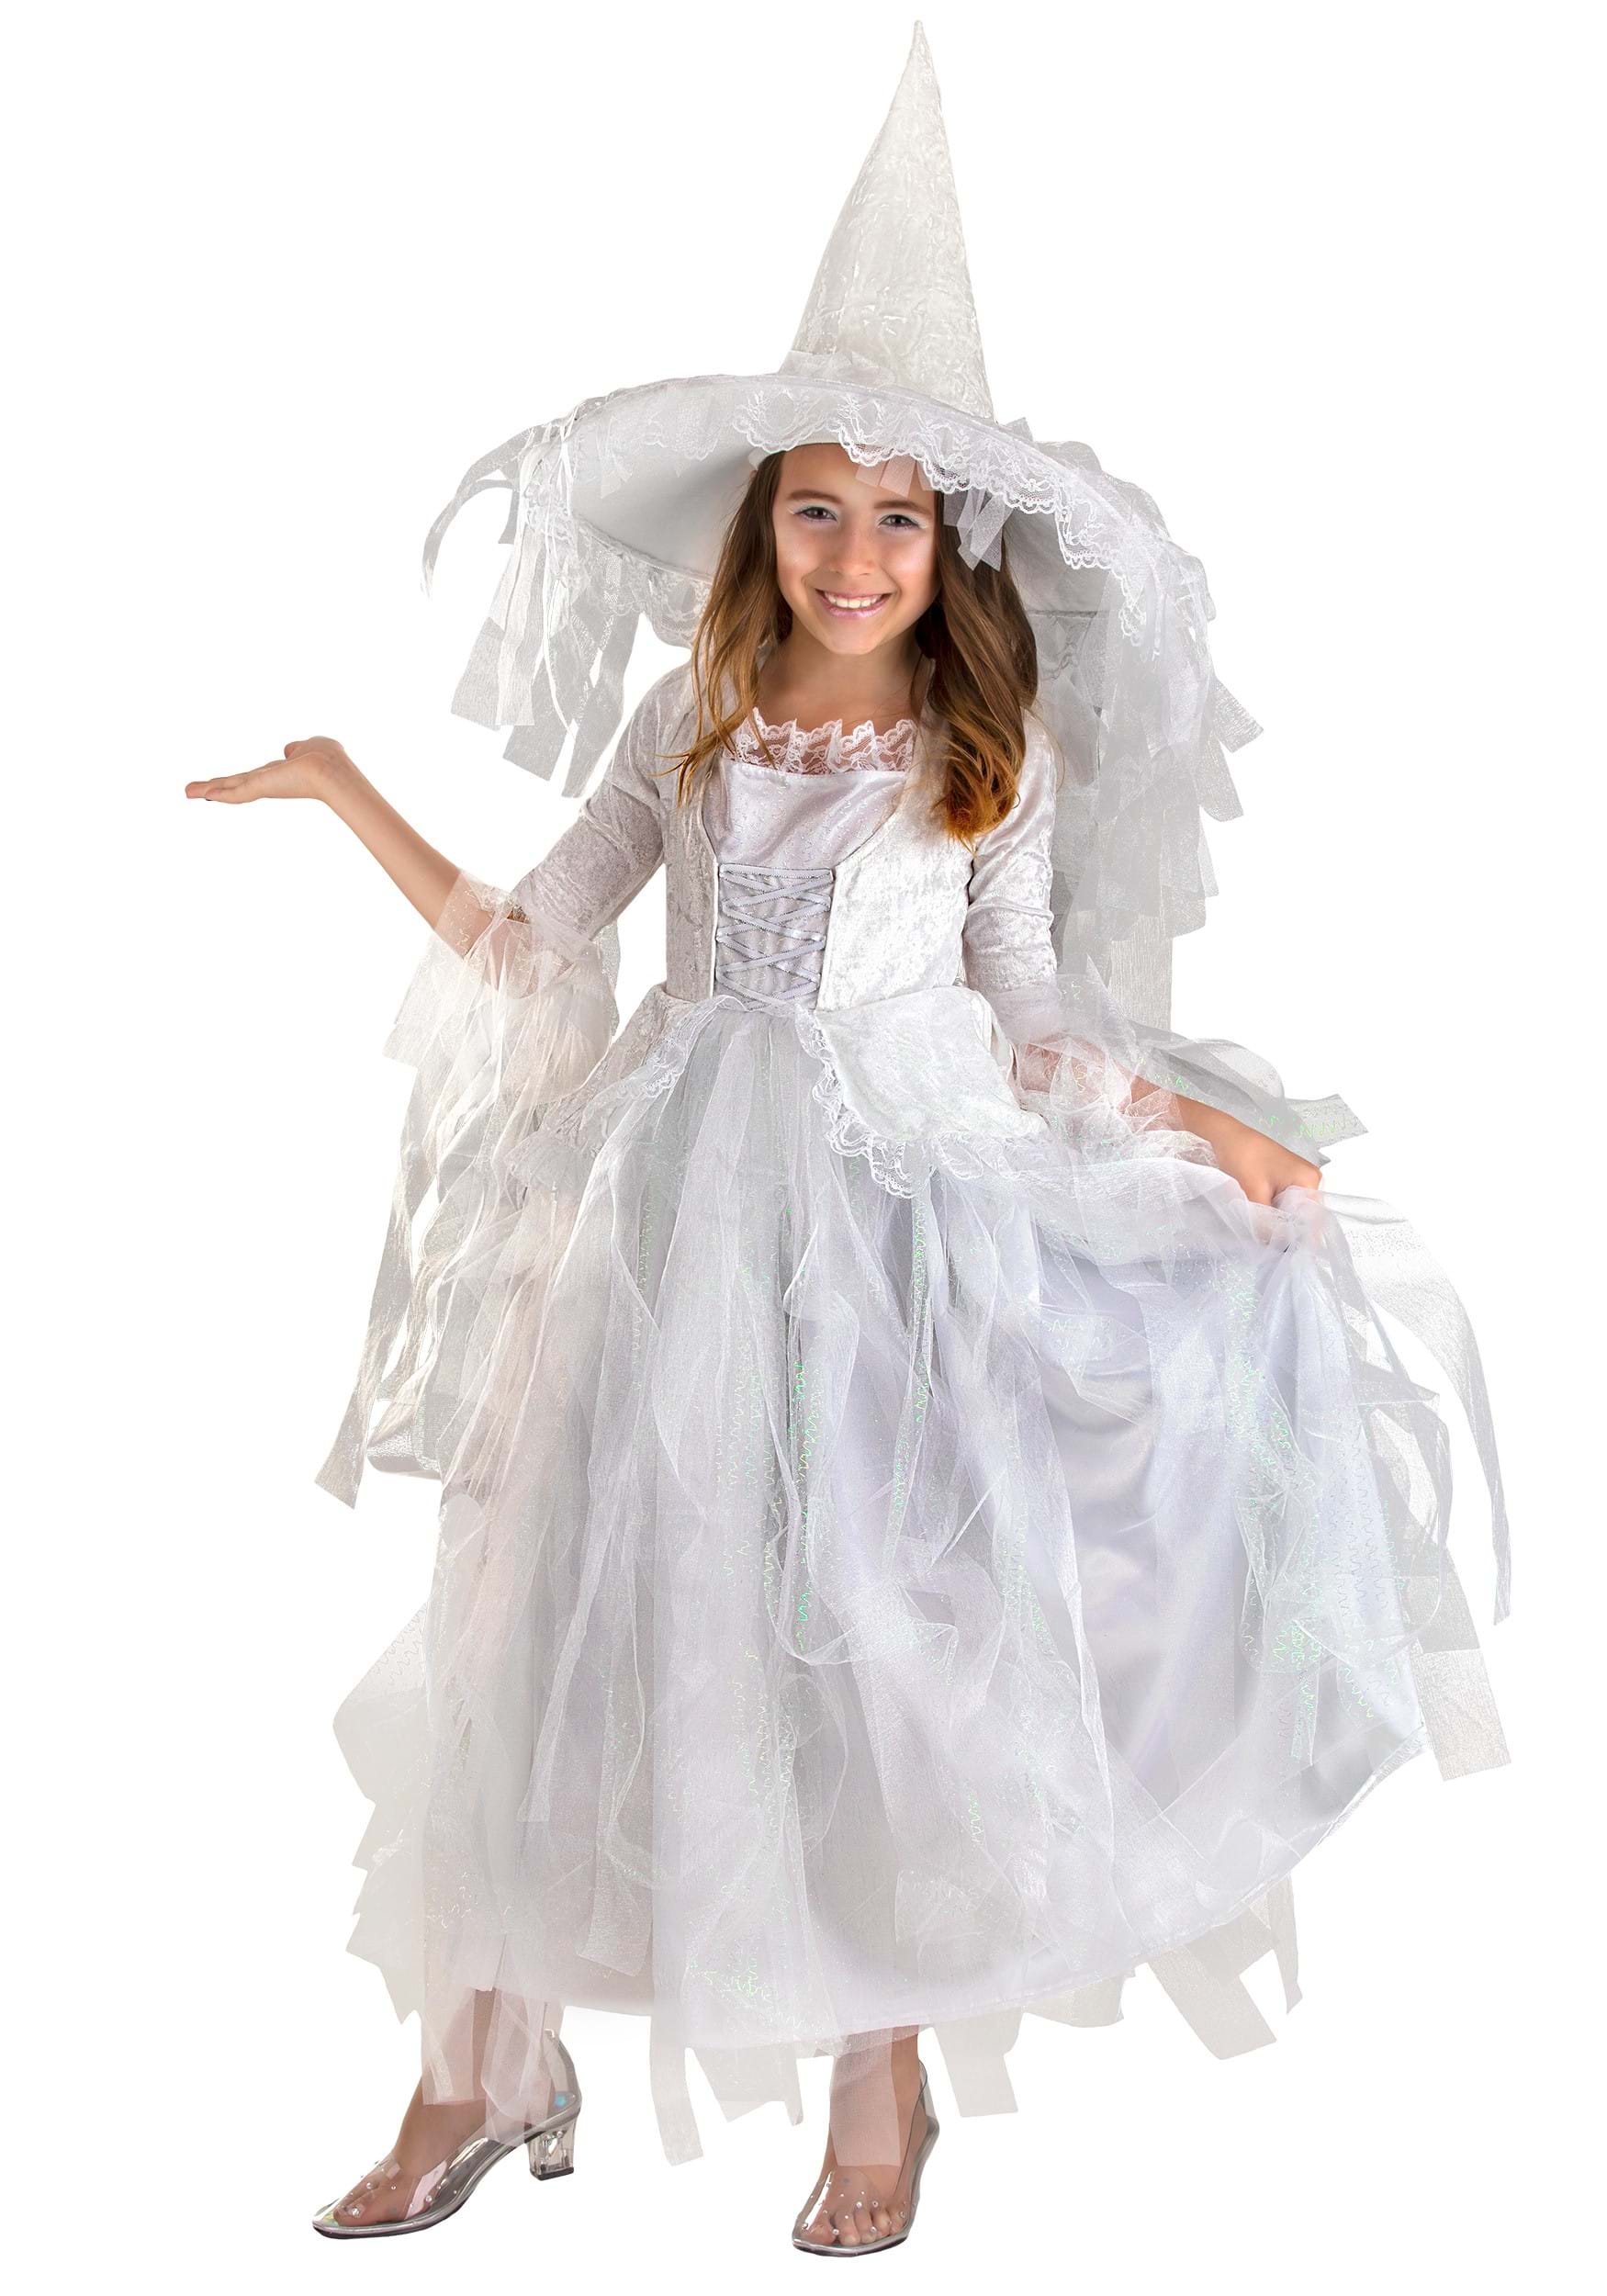 Photos - Fancy Dress FUN Costumes Kid's White Witch Costume Gray/White FUN2777CH